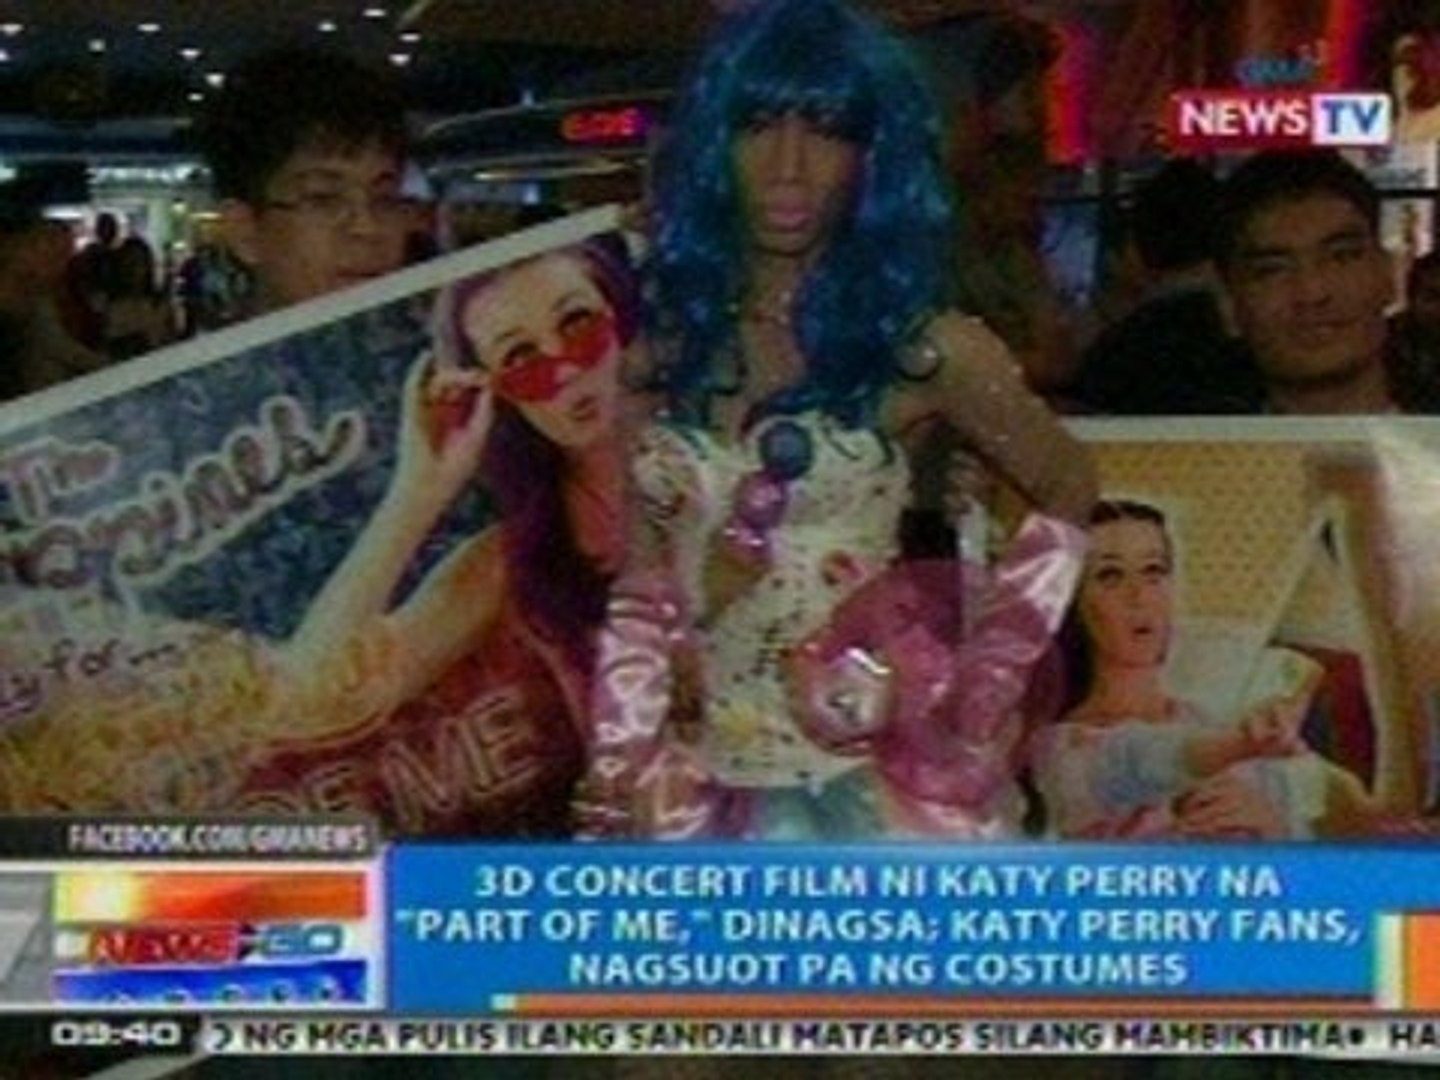 NTG: 3D concert film ni Katy Perry na 'Part of Me', dinagsa; Kate Perry fans, nagsuot pa n